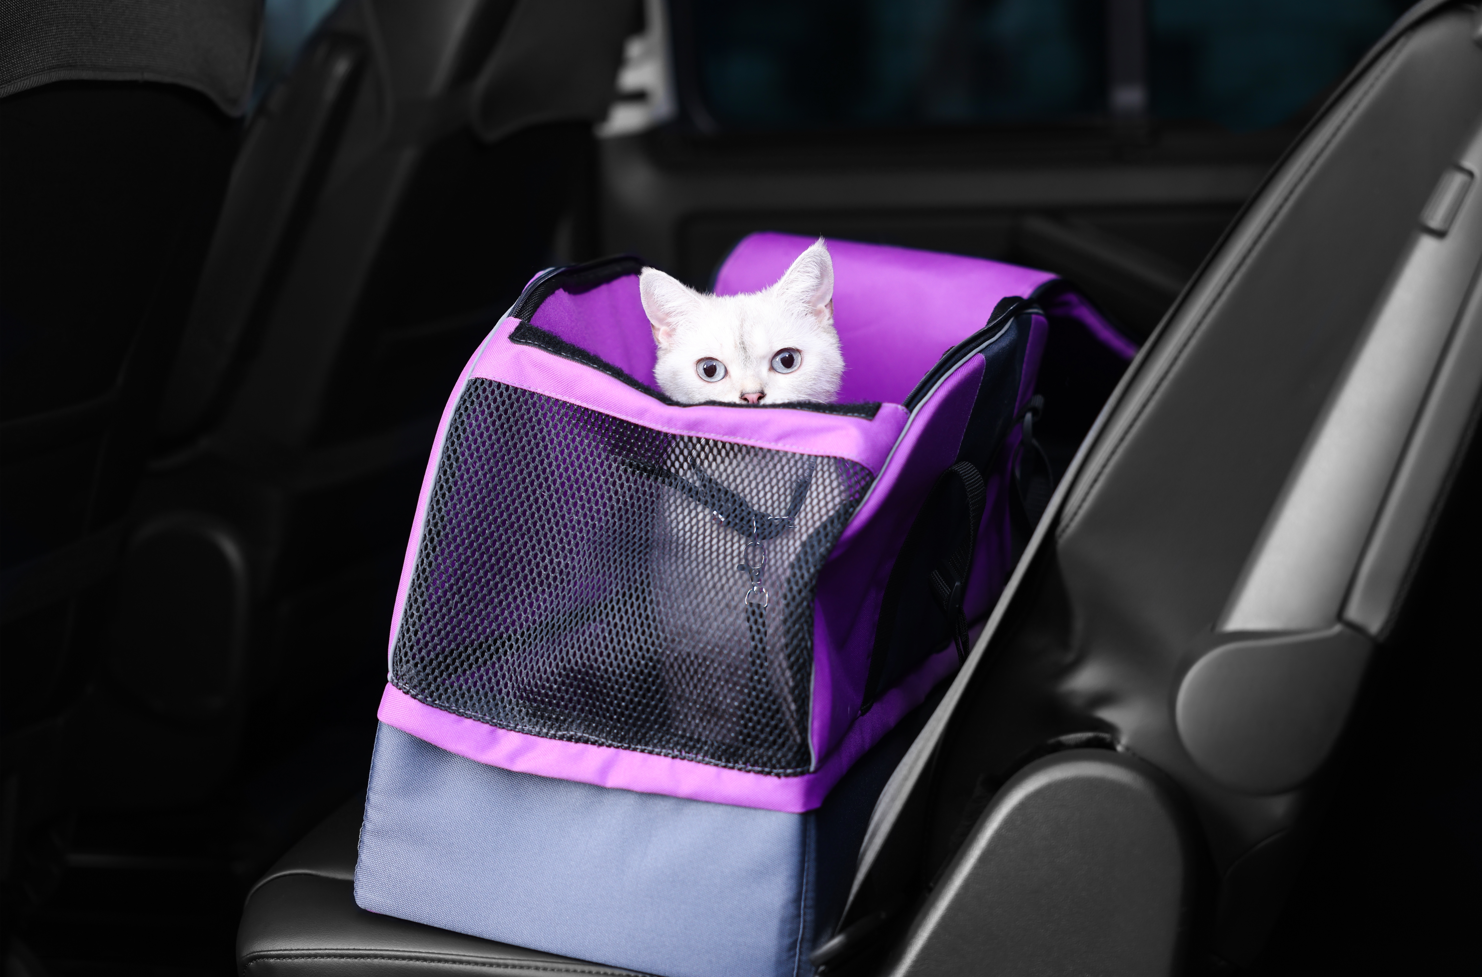 Cat in carrier in car